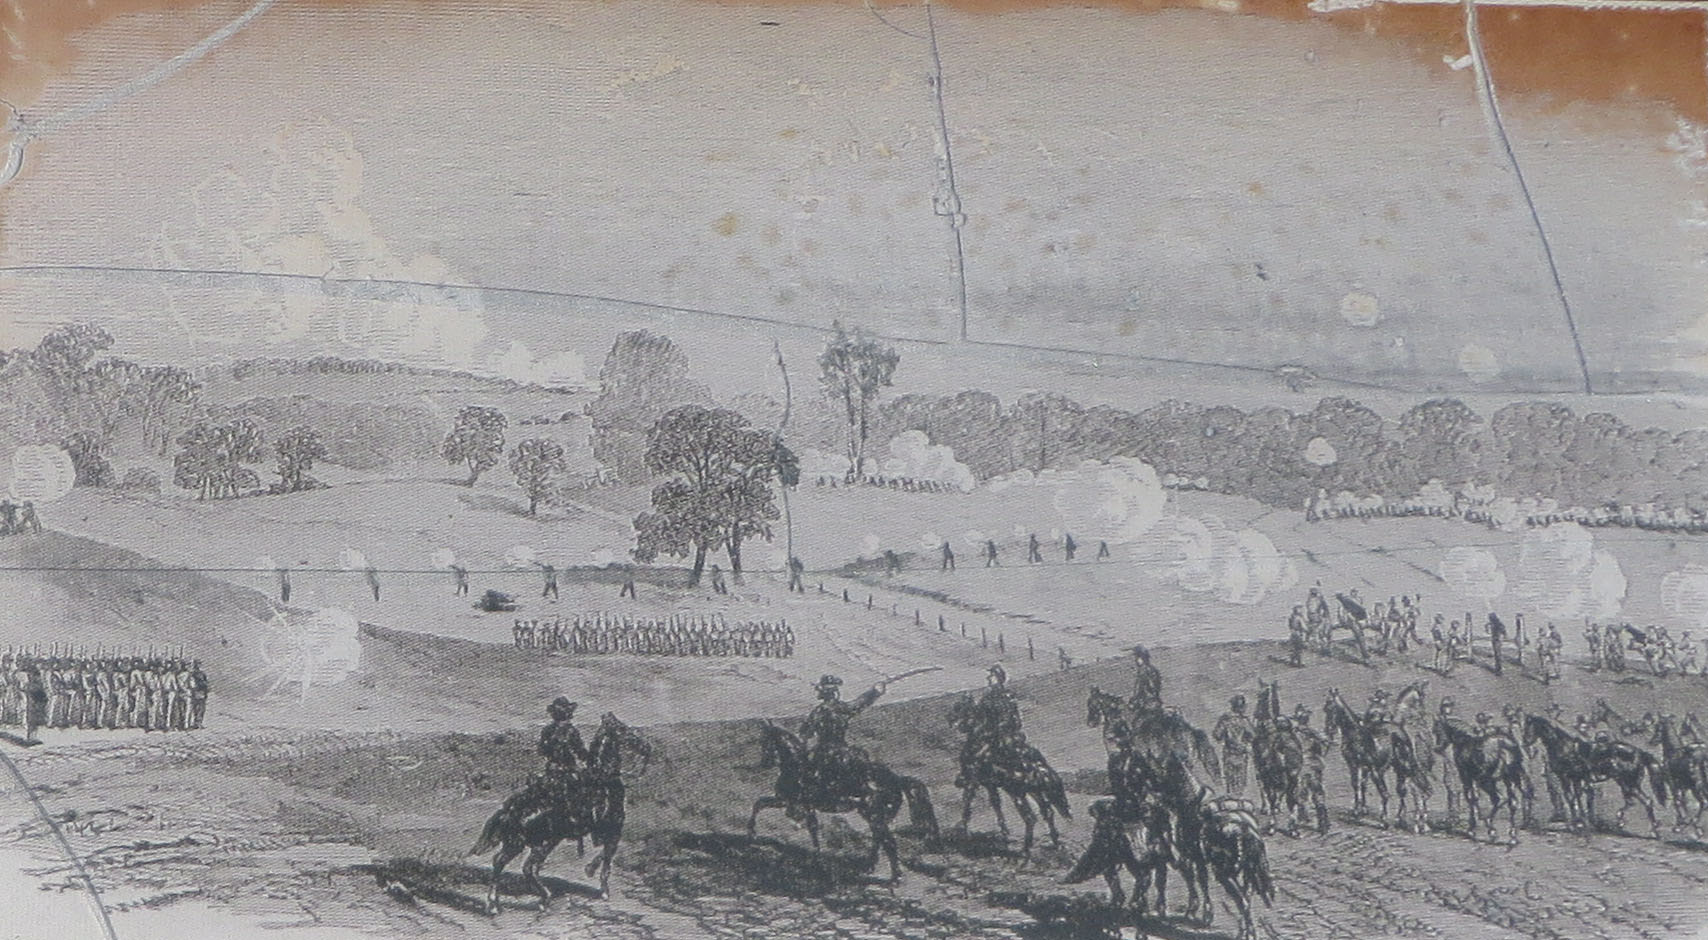 Battle of Boonsboro 1863